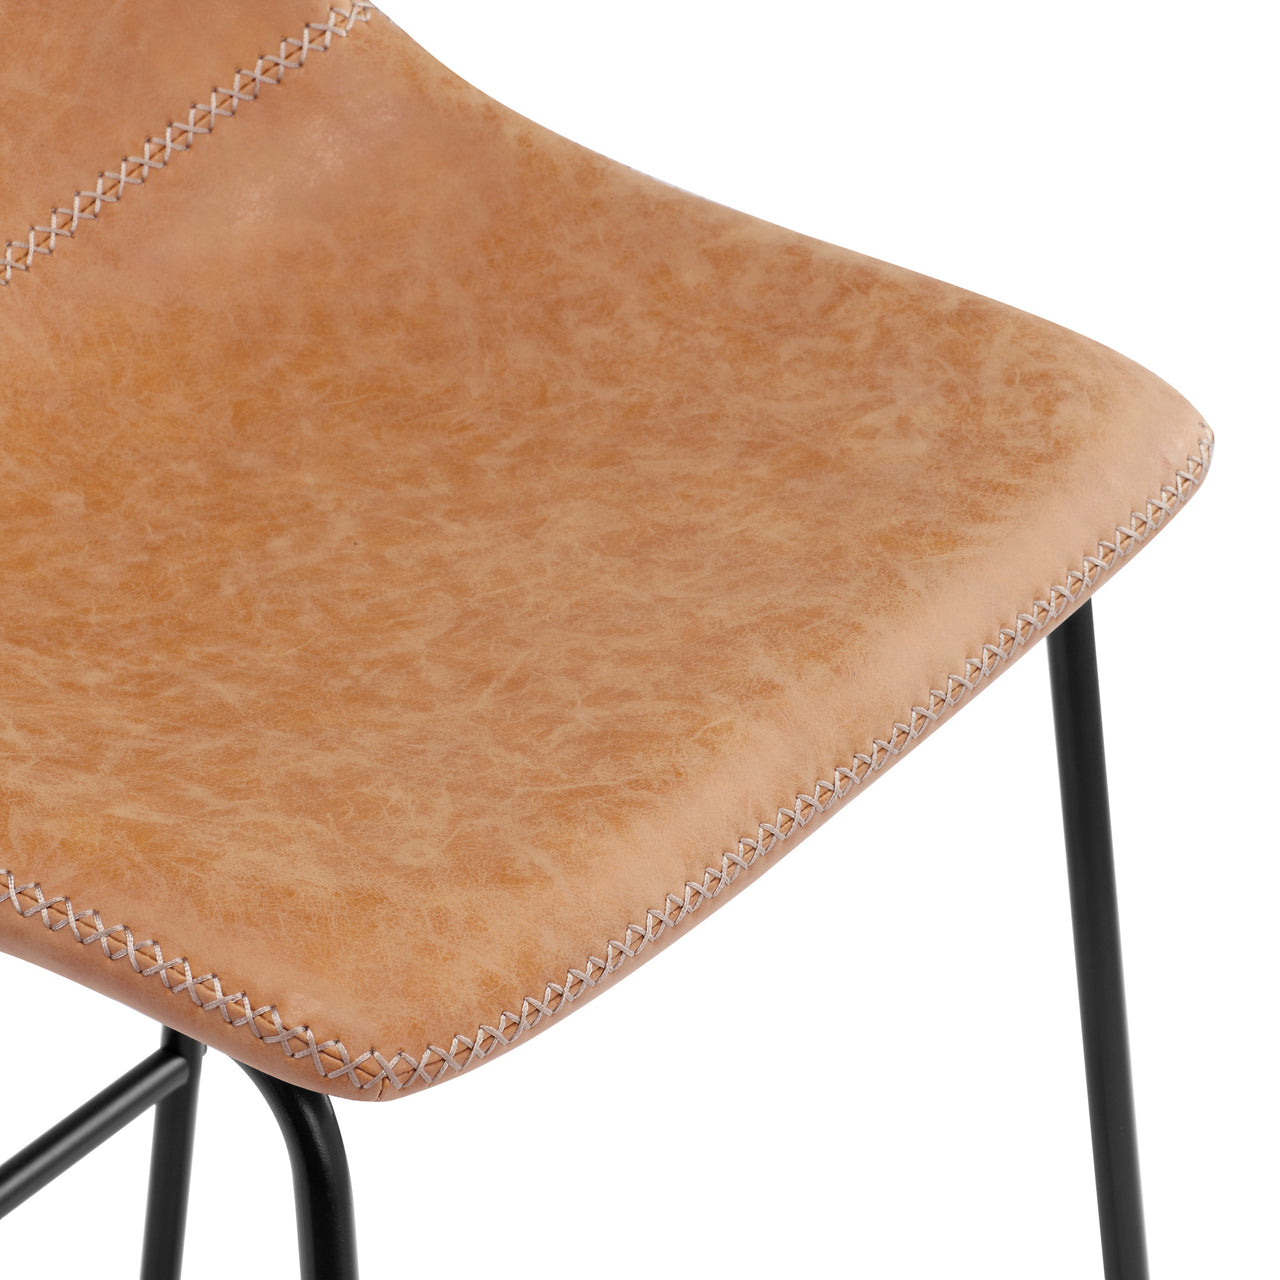 66cm Phoenix Vintage-Style Faux Leather Barstools (Set of 2)